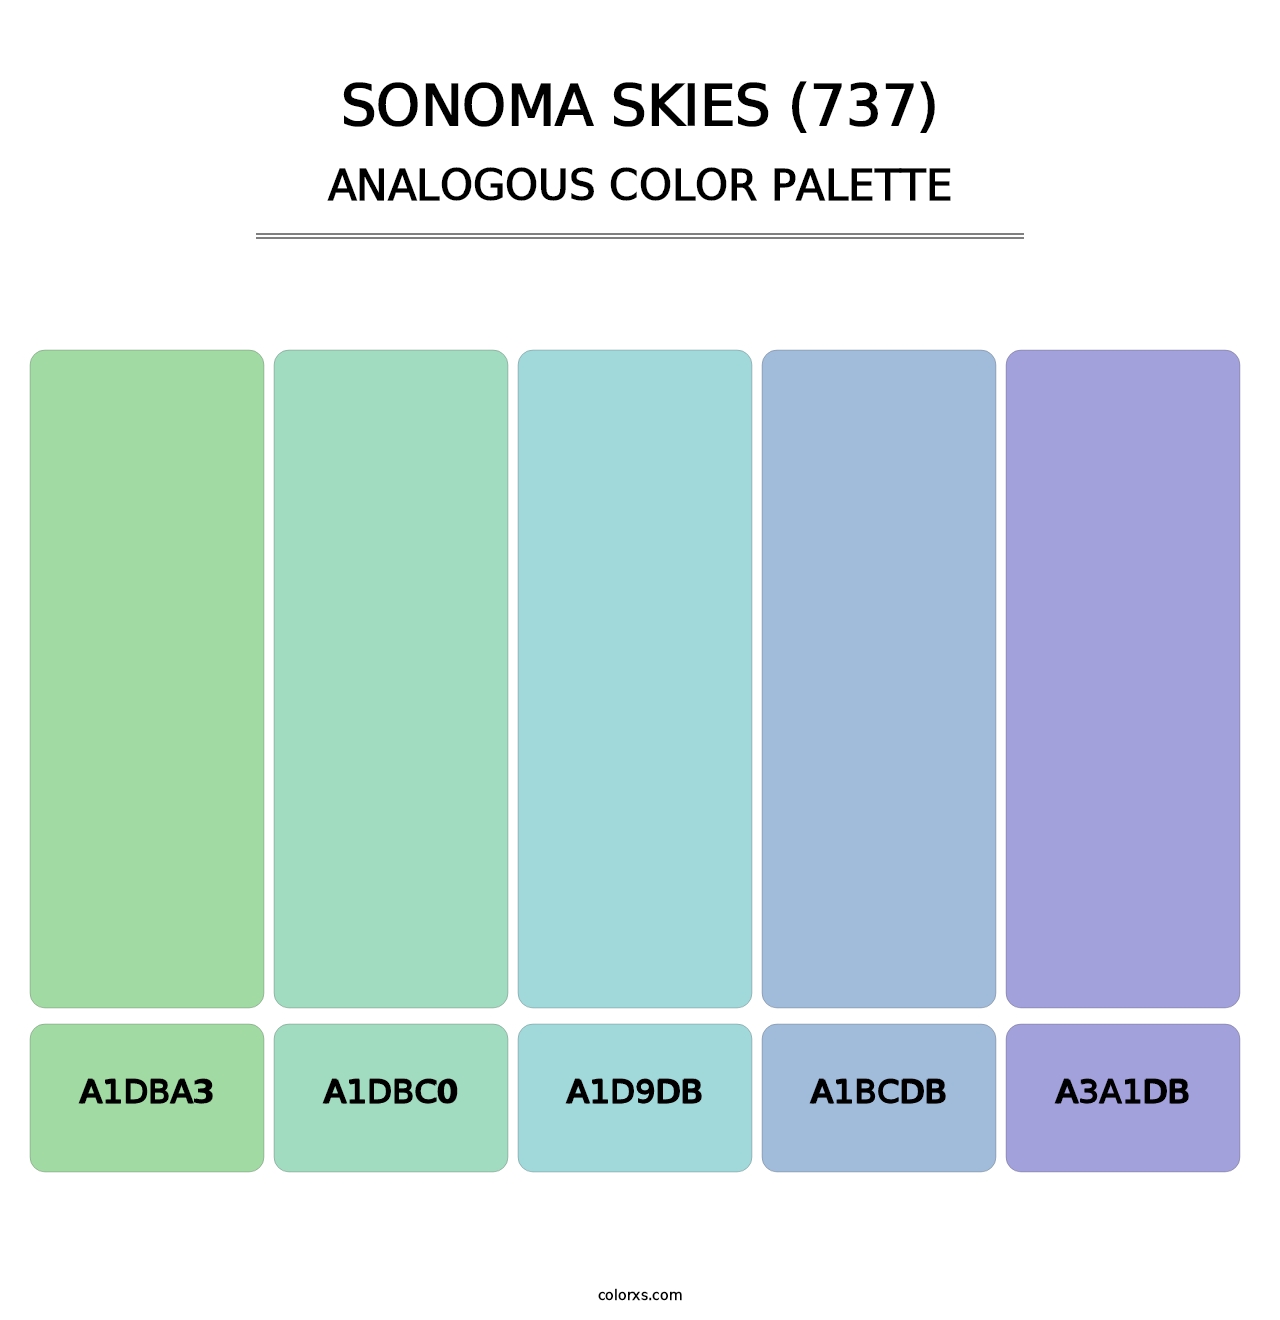 Sonoma Skies (737) - Analogous Color Palette